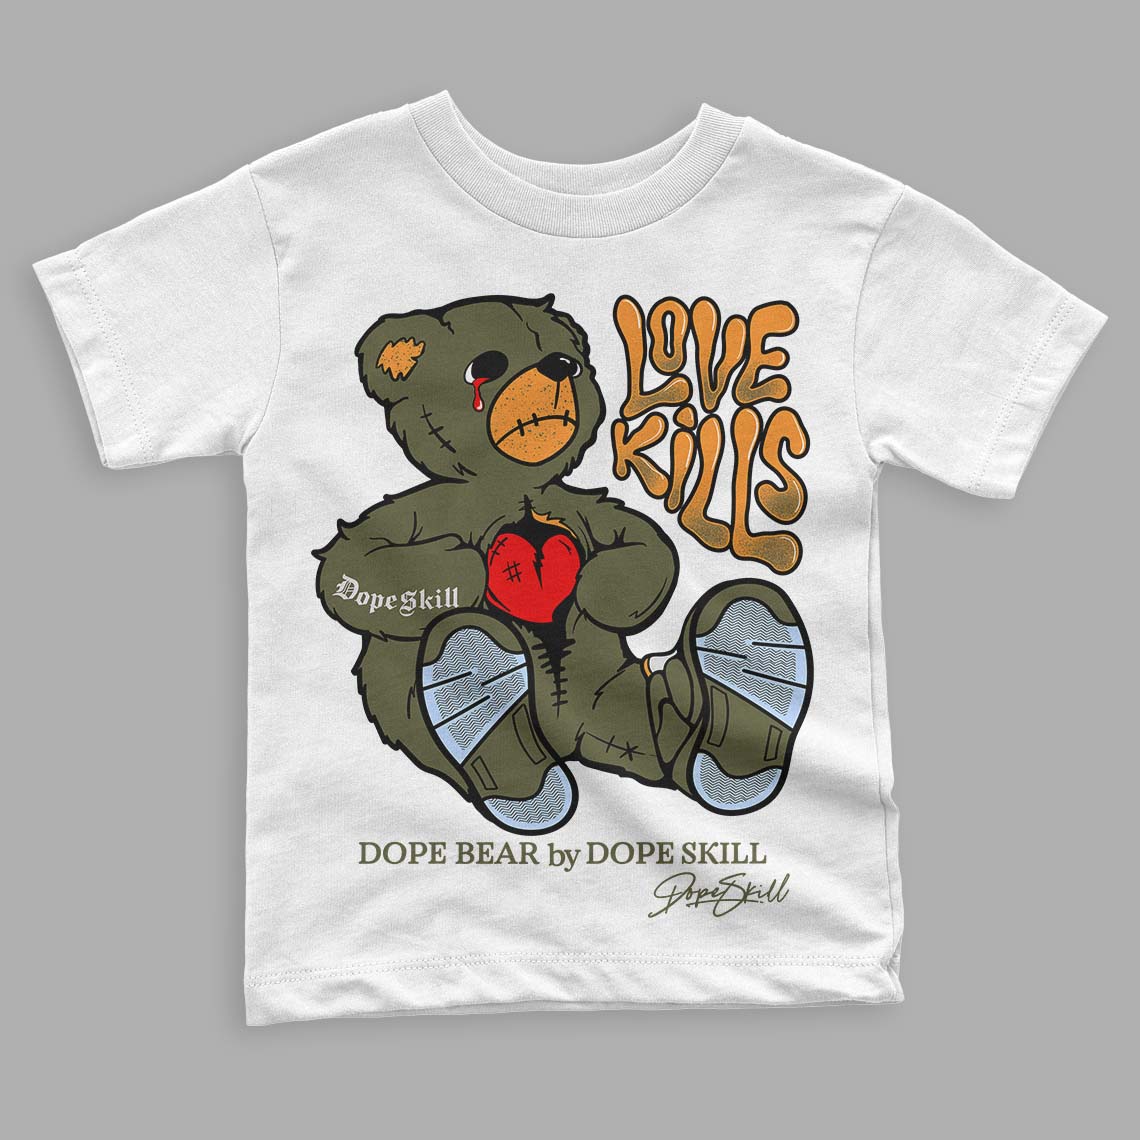 Jordan 5 "Olive" DopeSkill Toddler Kids T-shirt Love Kills Graphic Streetwear - White